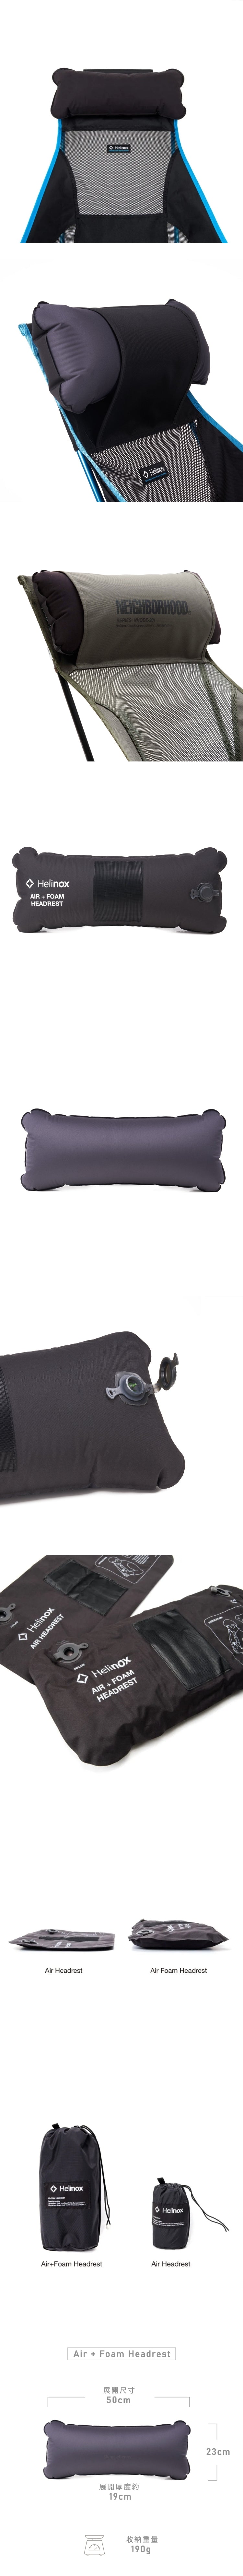 Helinox • 充氣泡棉頭枕 Air+ Foam Headrest